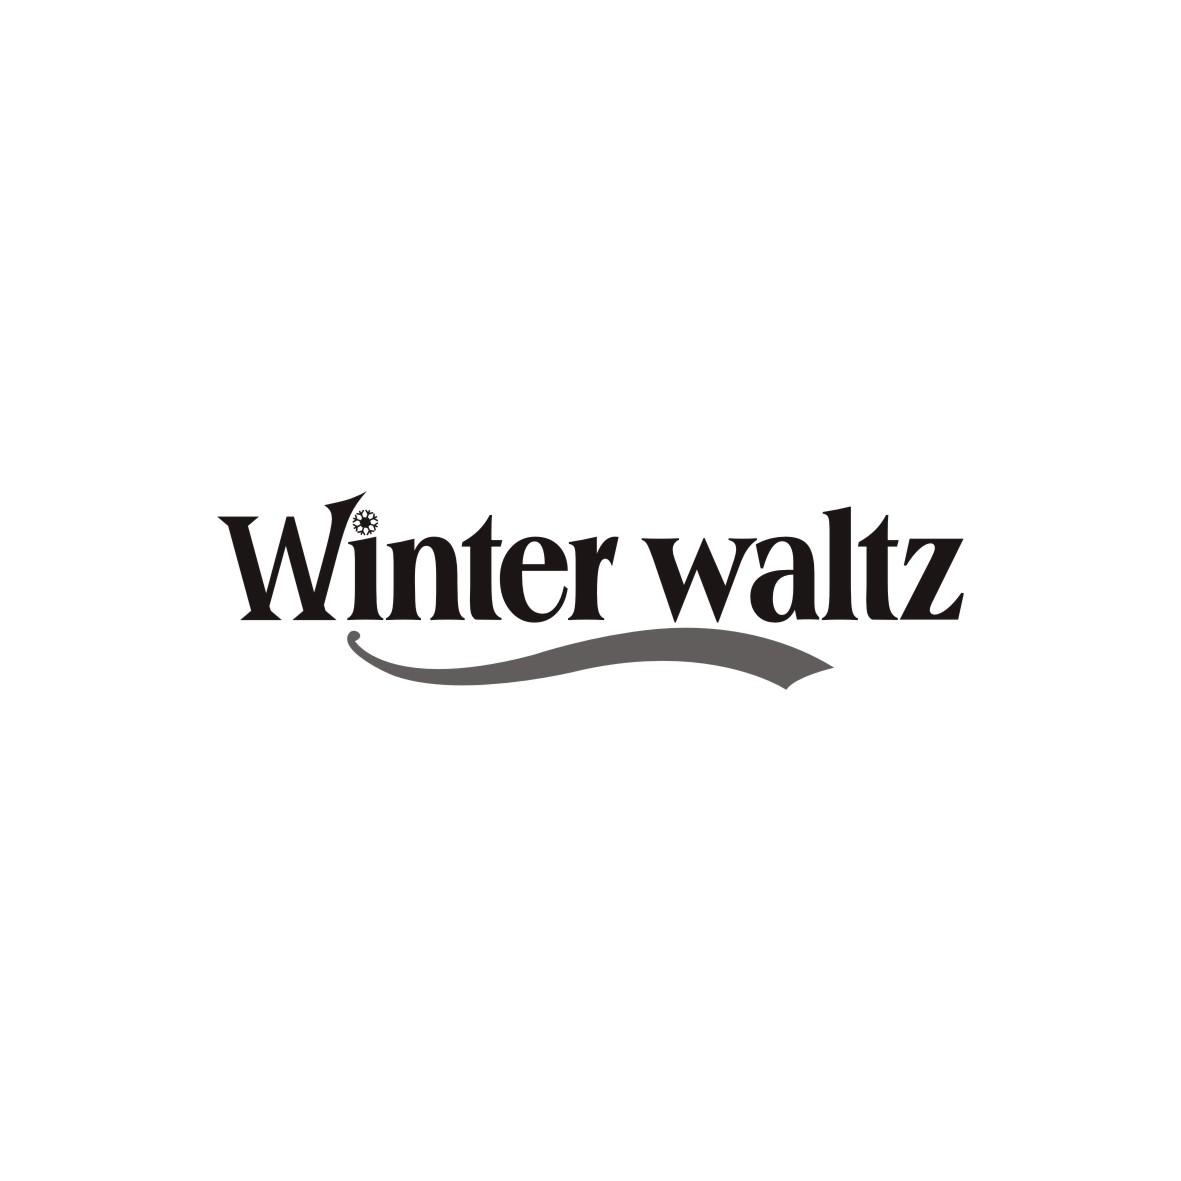 WINTER WALTZ商标转让